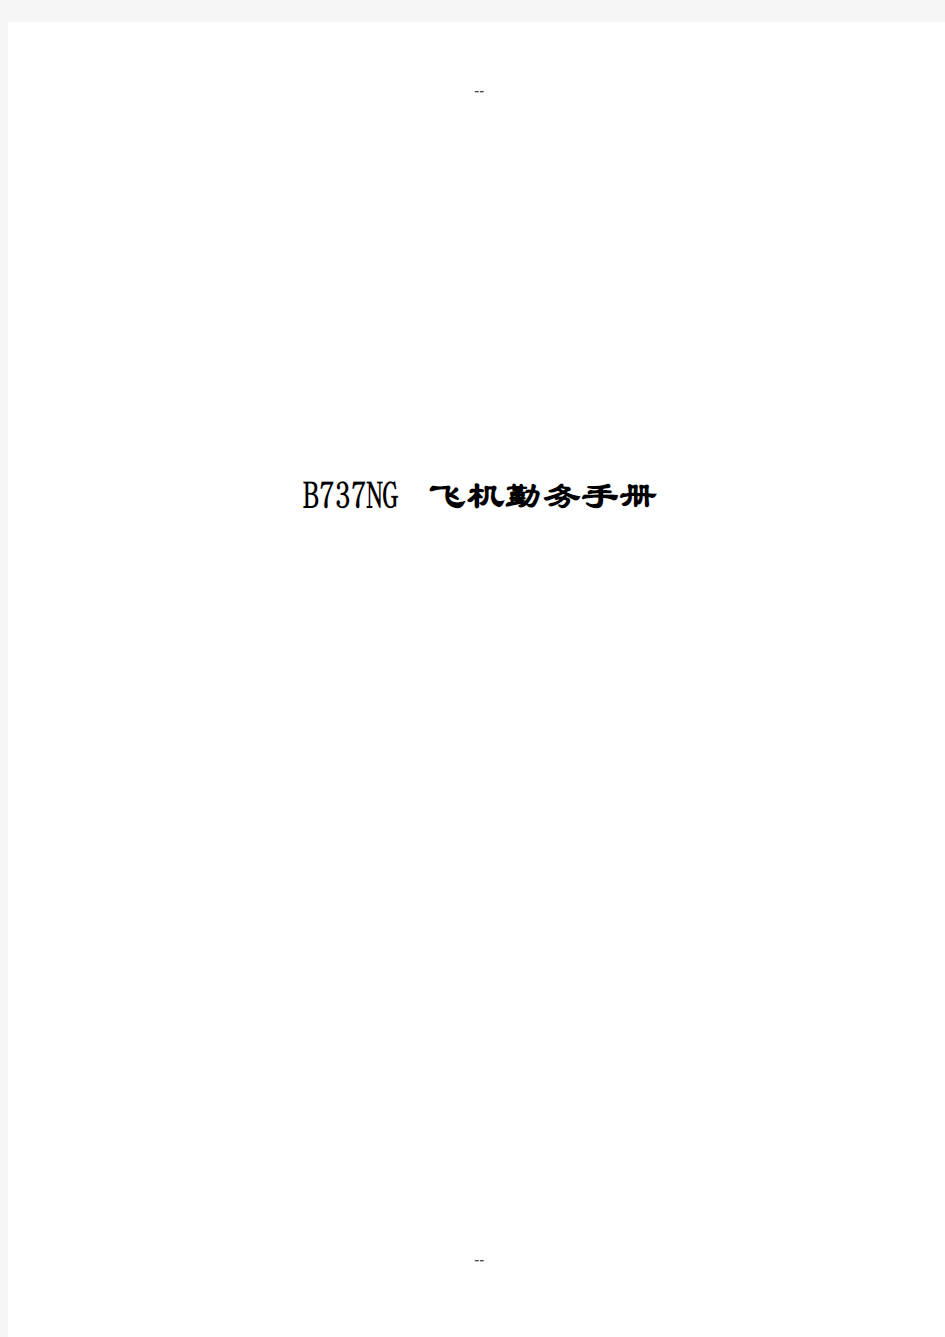 BNG飞机勤务手册中文版